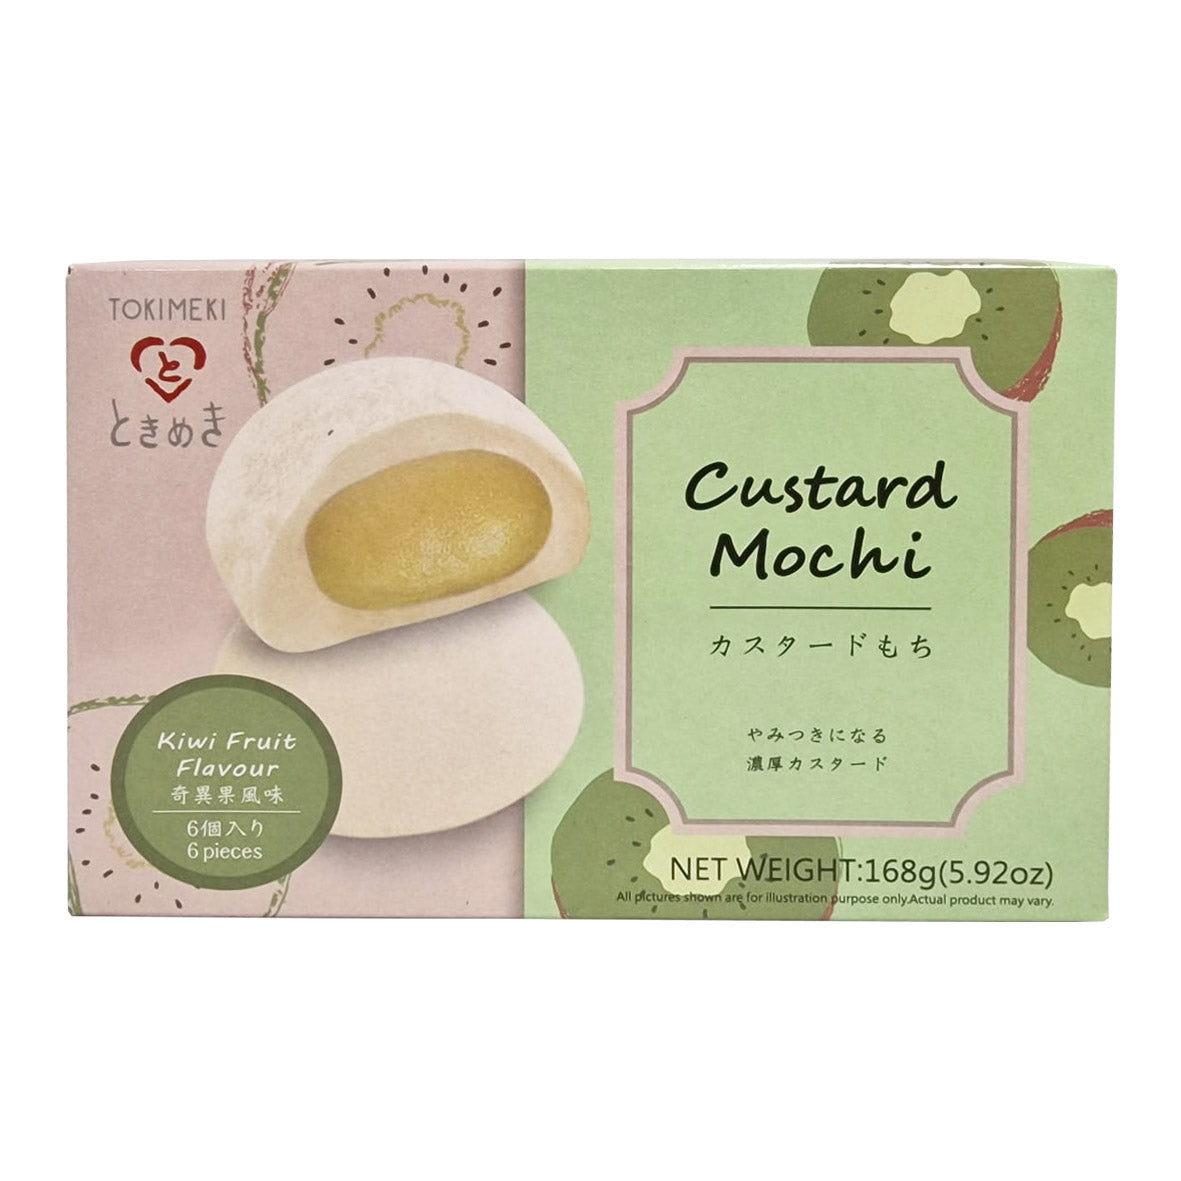 Custard Mochi - Kiwi Fruit Flavour